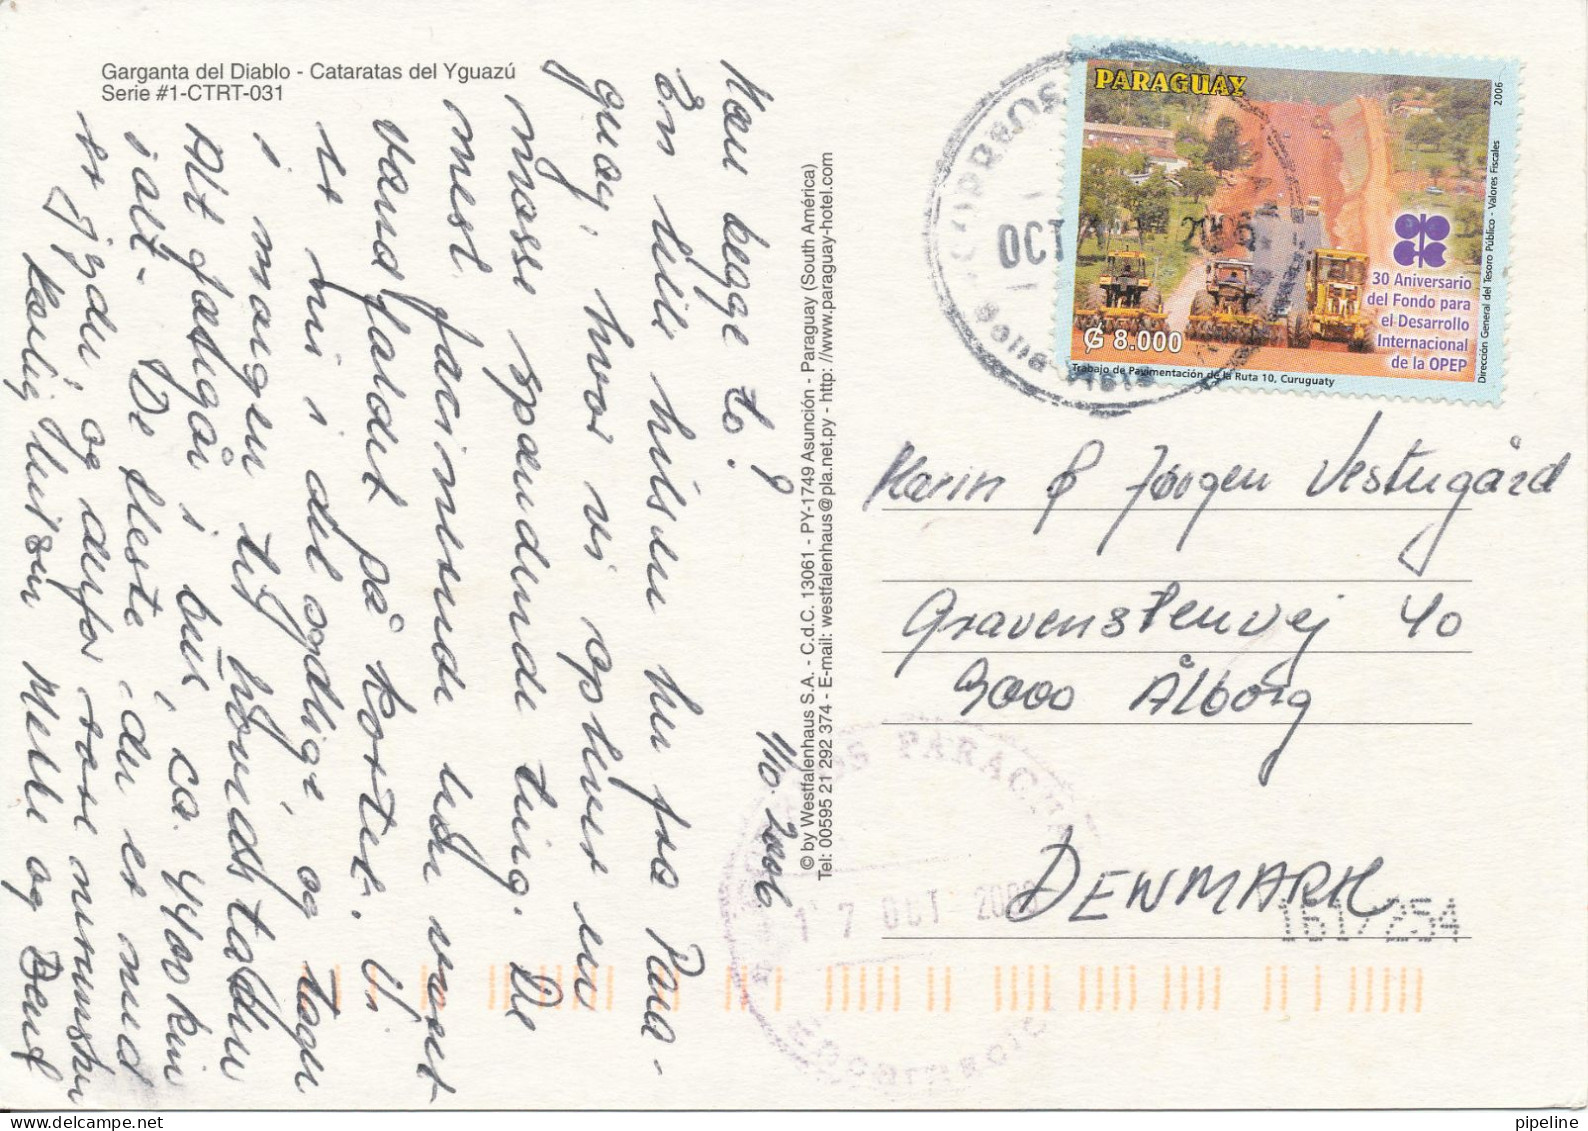 Paraguay Postcard Sent To Denmark 17-10-2006 - Paraguay